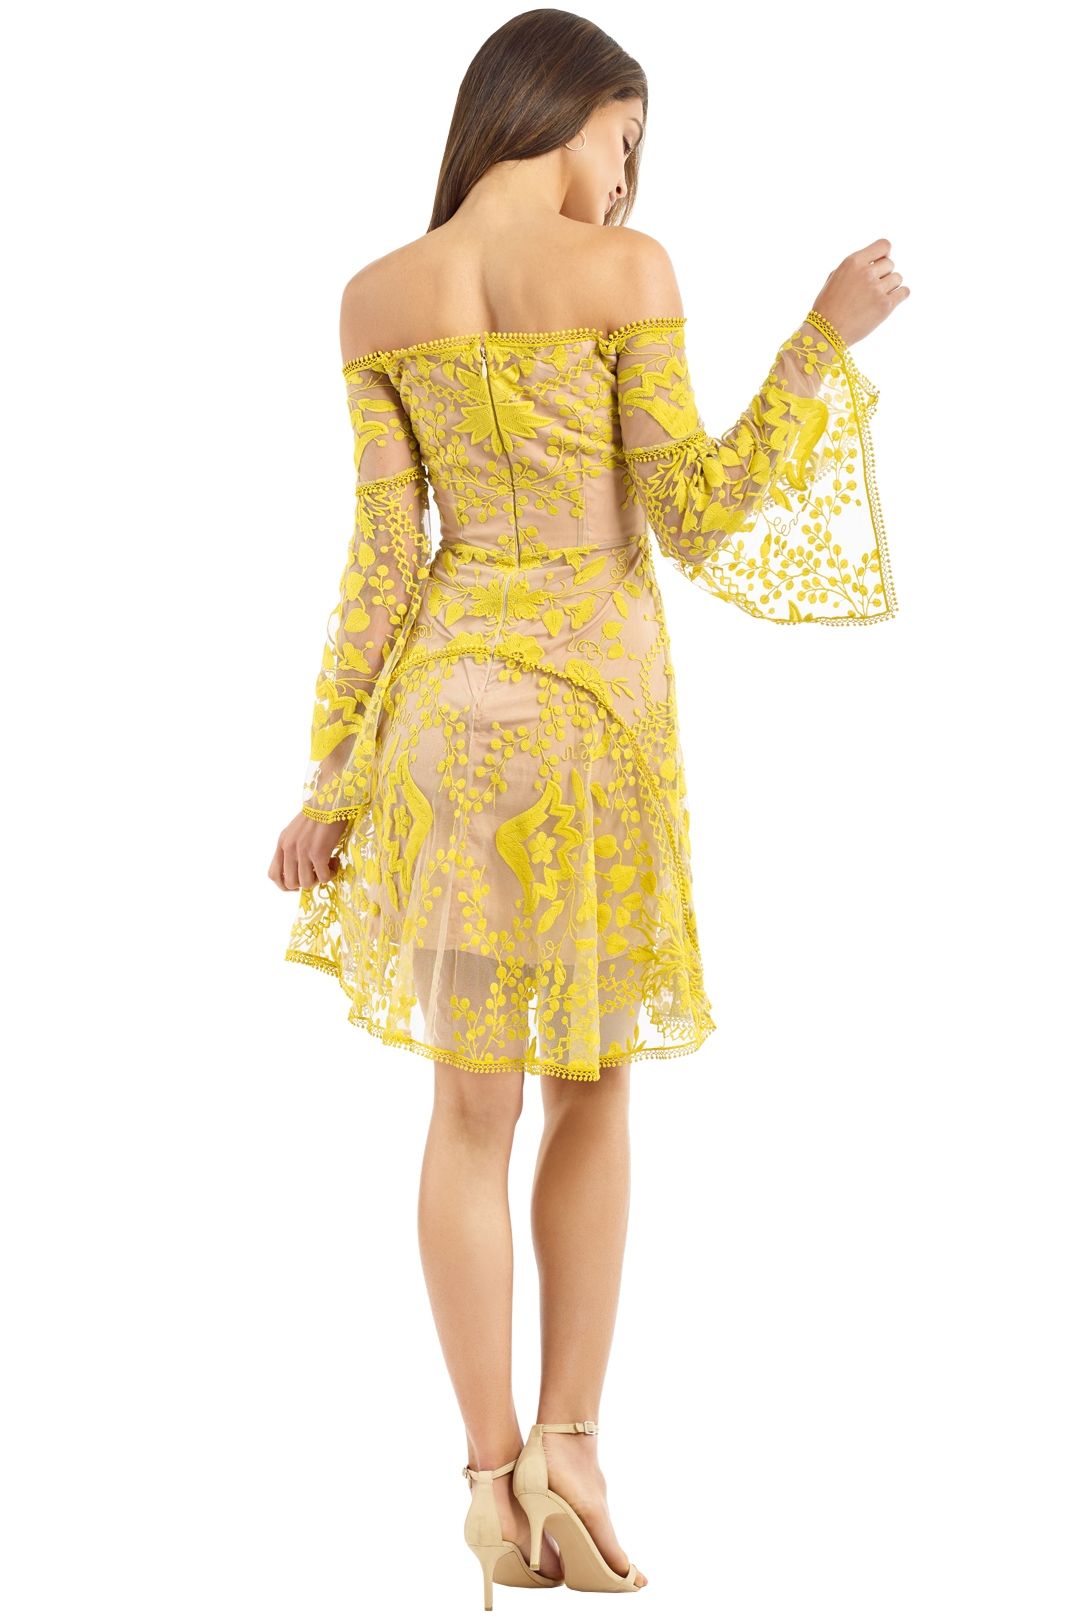 Thurley - Marigold Mini Dress - Yellow - Back